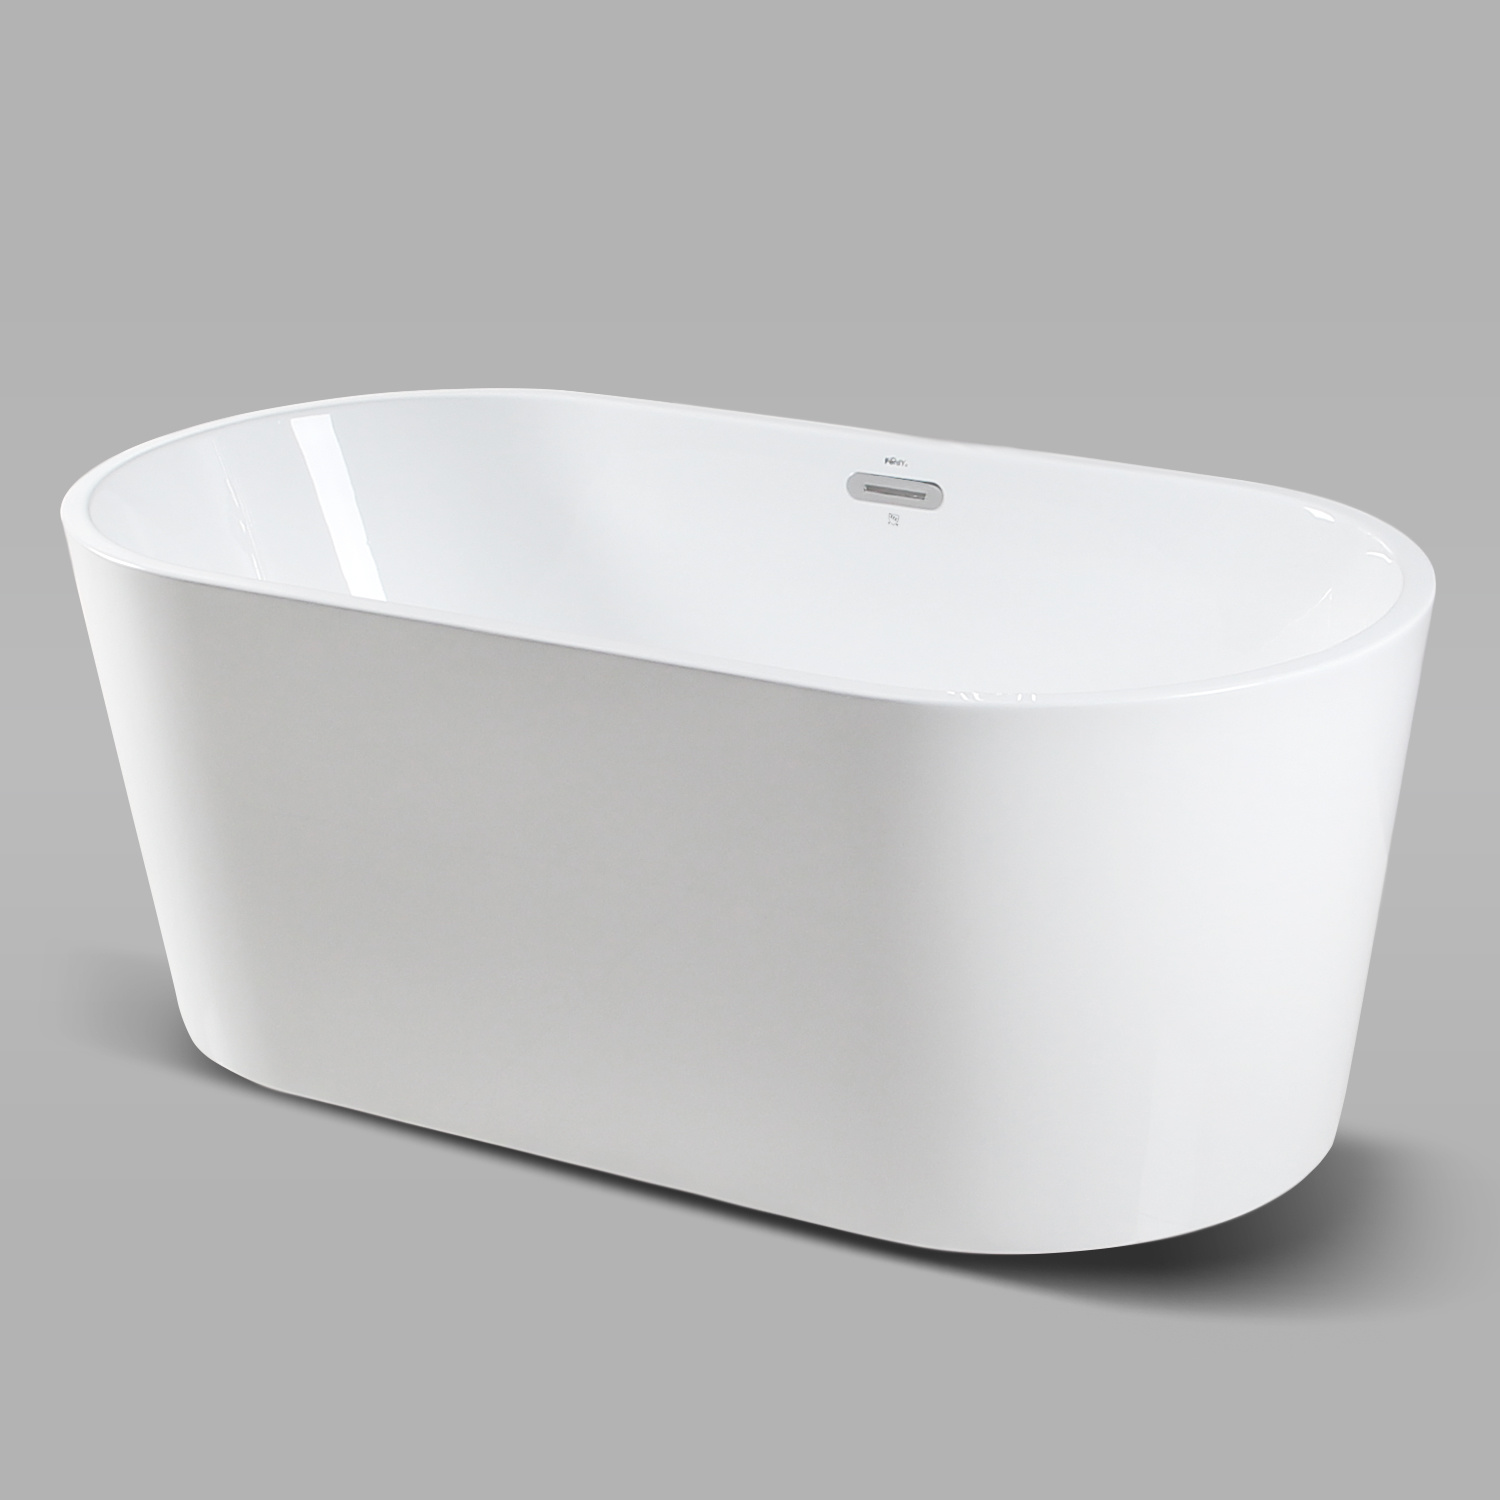 59 inch Acrylic Freestanding Bathtub, Small Classic Oval Shape Acrylic Soaking Bathtub with Brushed Nickel Drain & Minimalist Linear Design Overflow, Modern White-CASAINC